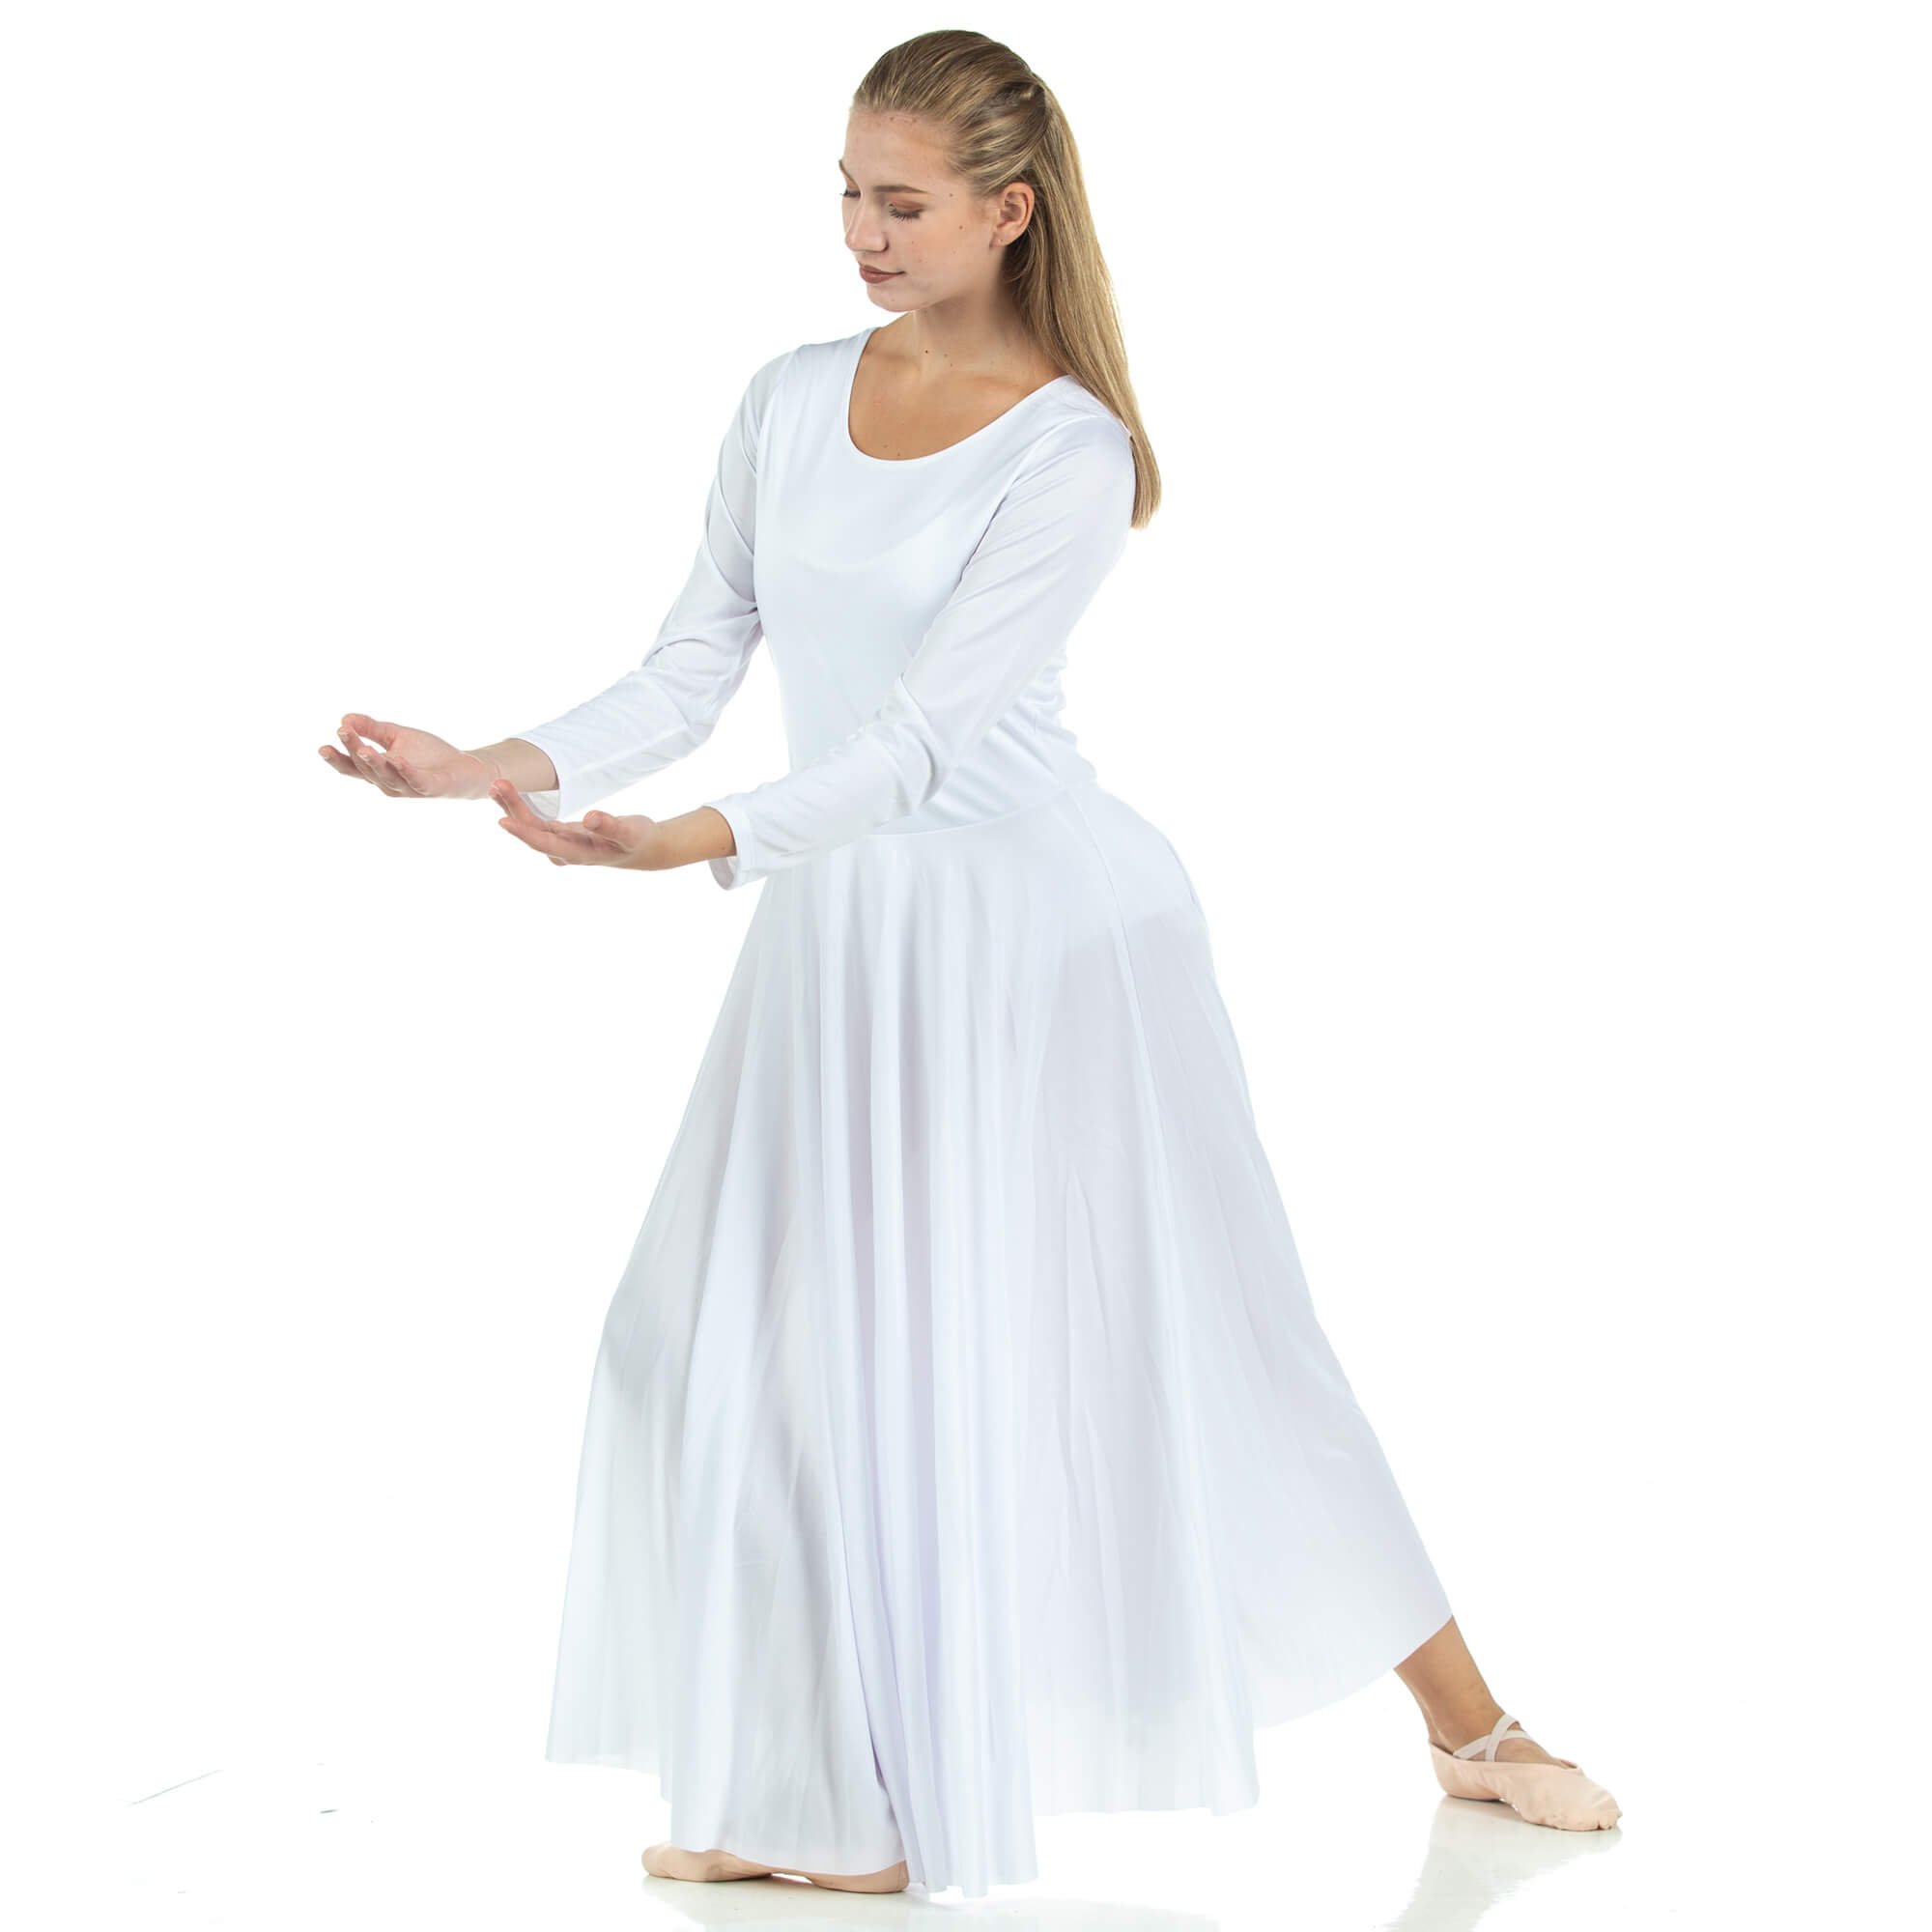 IDOPIP Women Metallic Color Block Praise Full Length Long Sleeve Dance Dress Liturgical Lyrical Dancewear Worship Robe Dress 